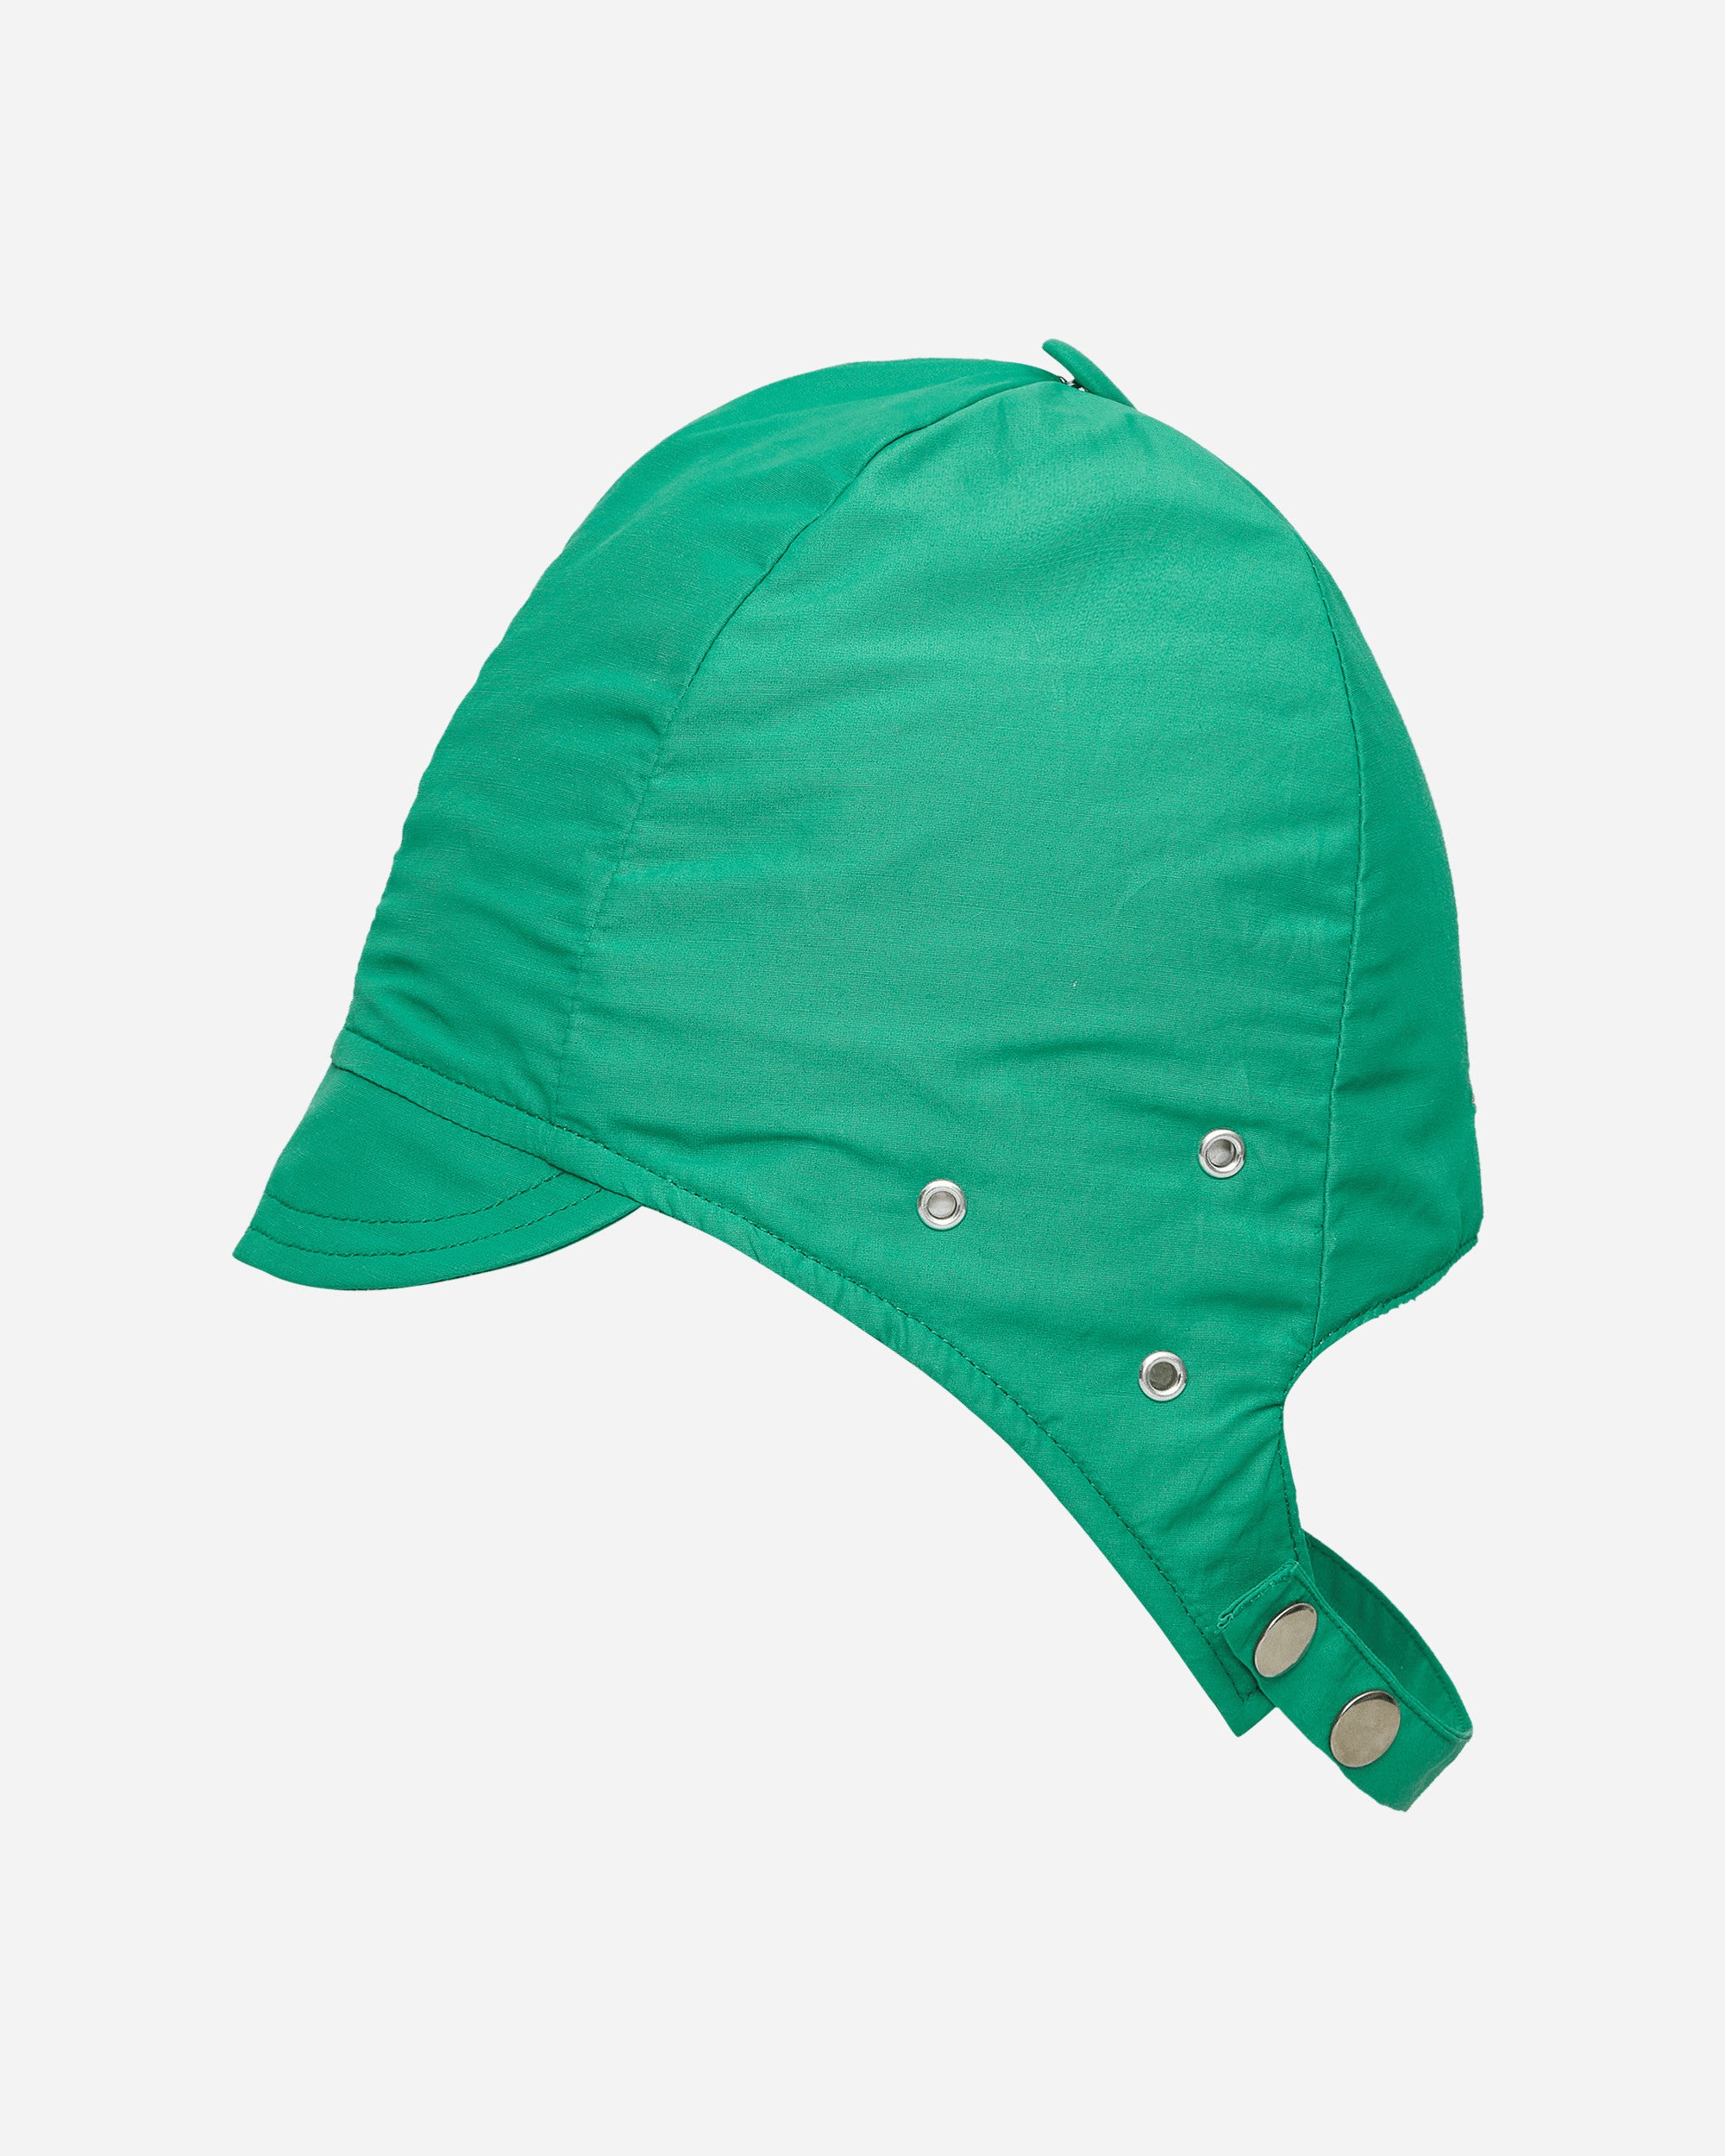 Bode Burlington Green Hats Caps MR24AC40N001 300